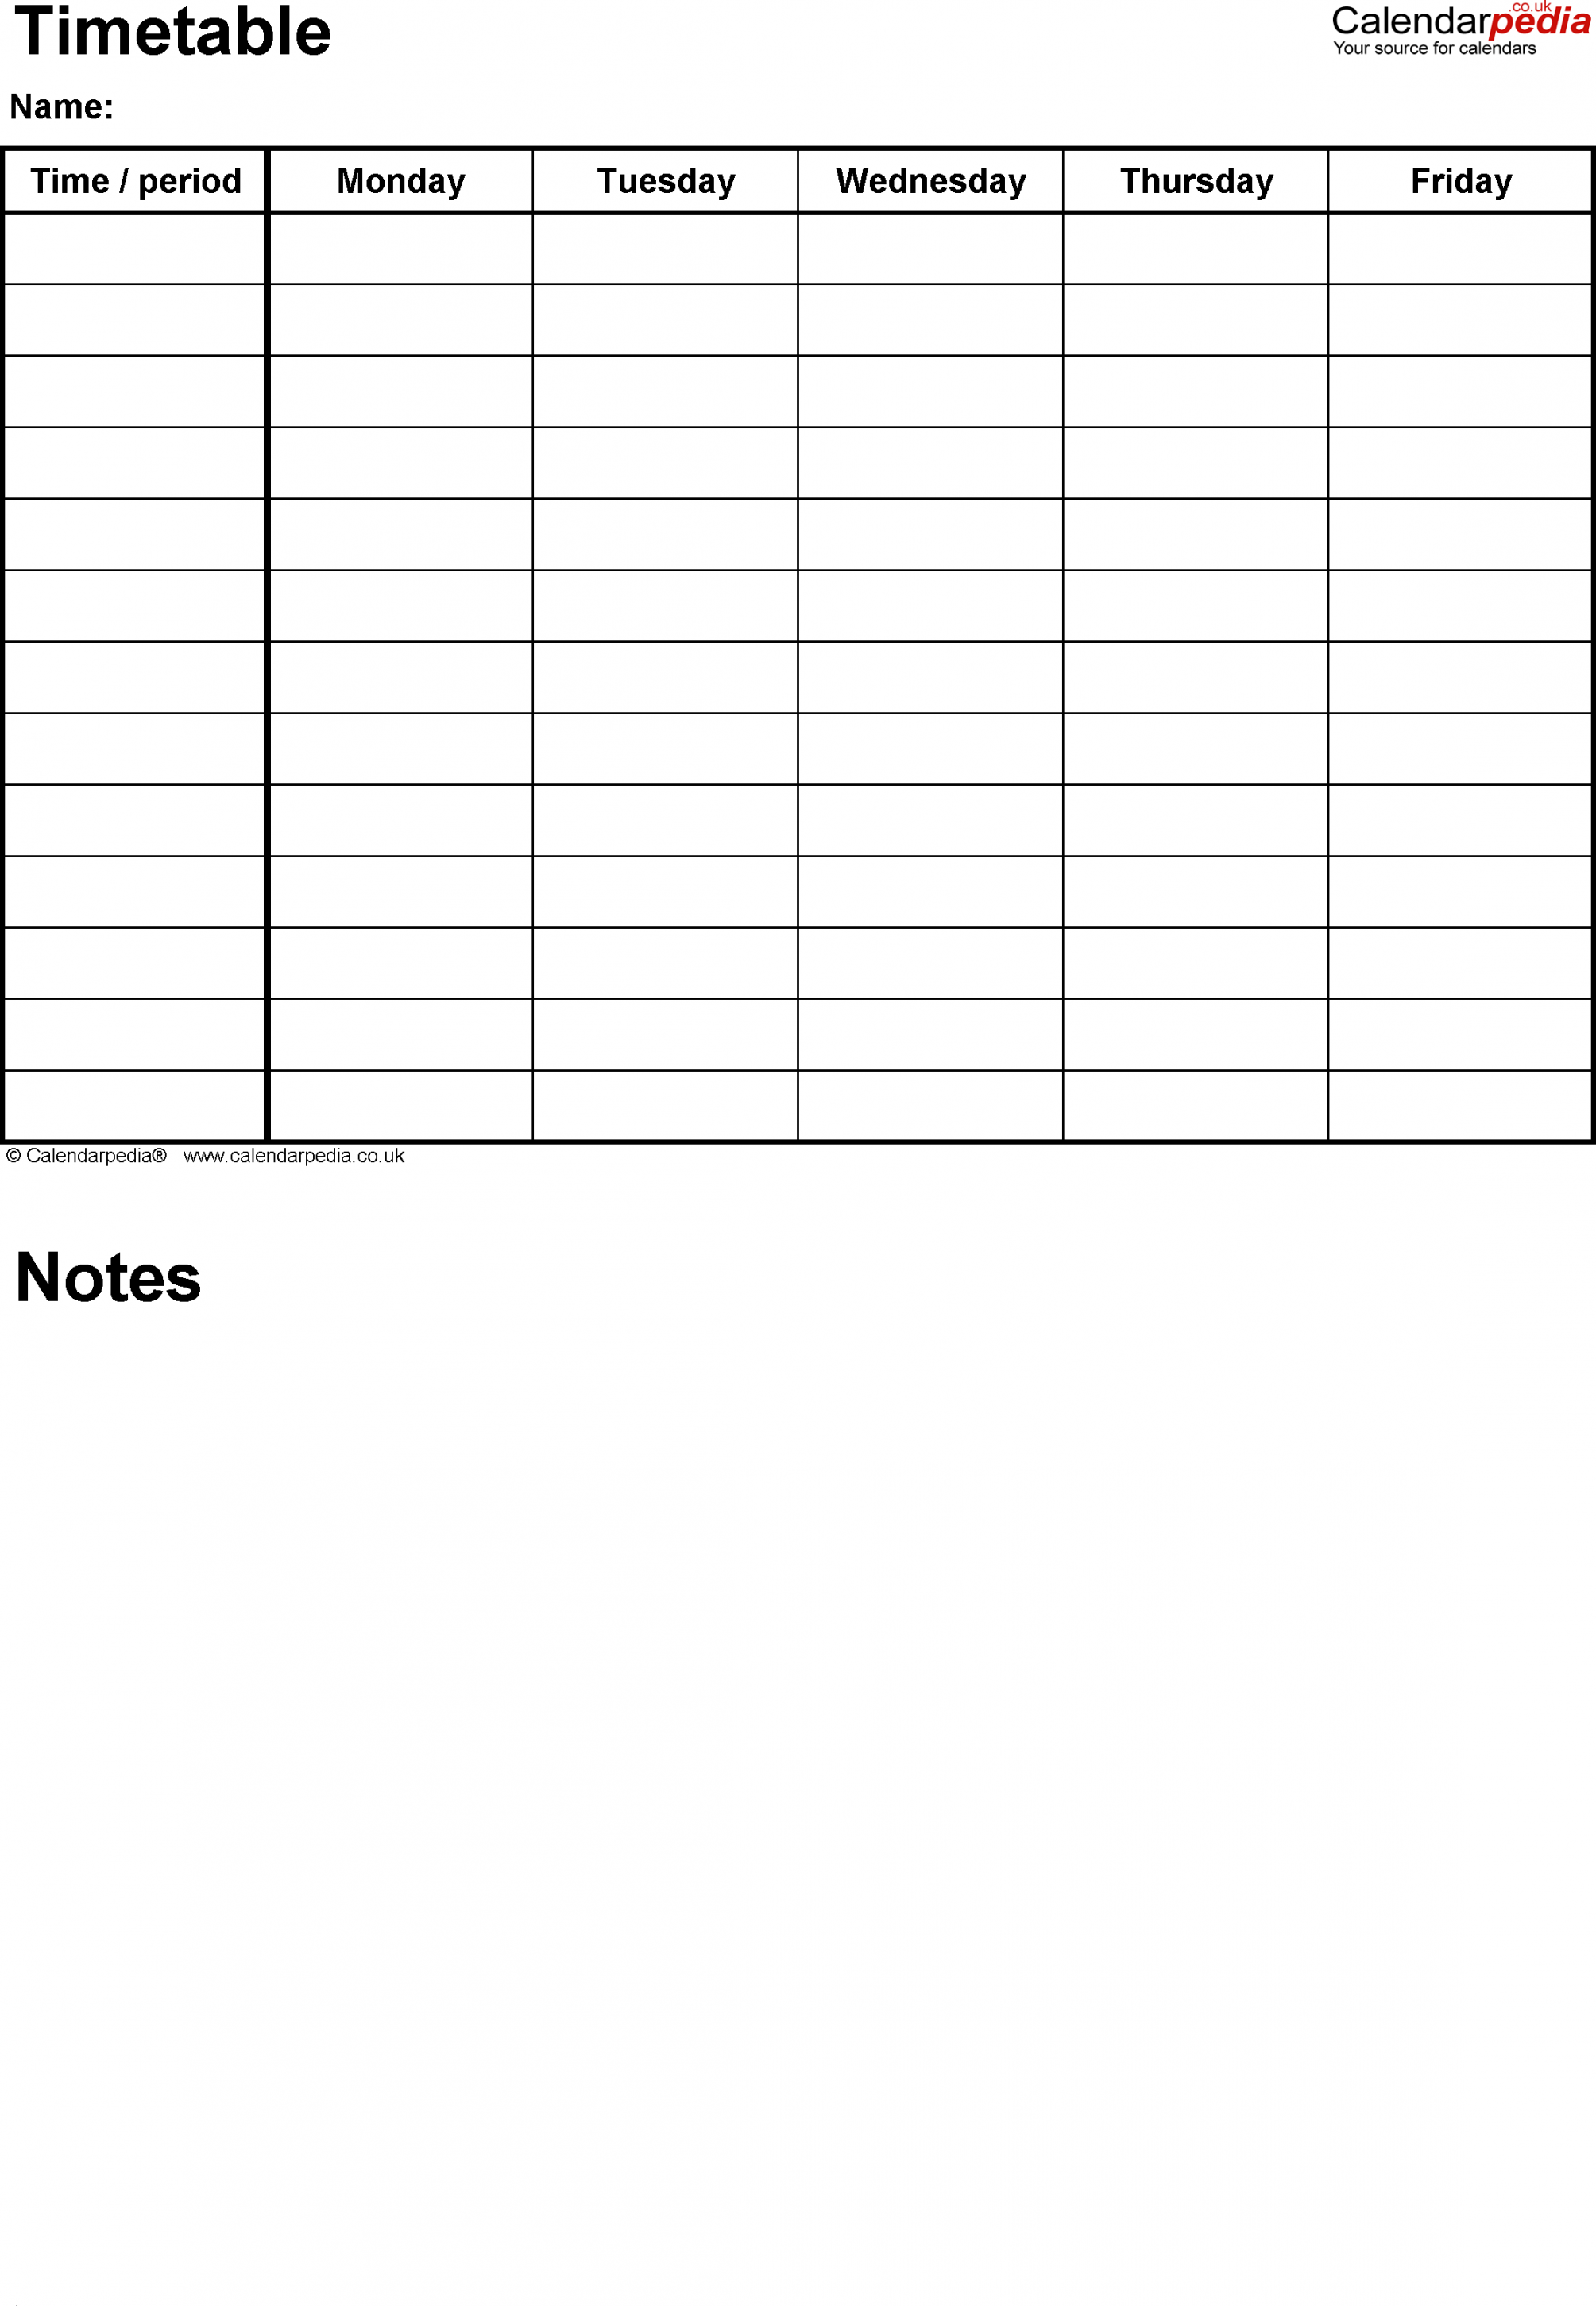 Timetable templates for Microsoft Word - free and printable